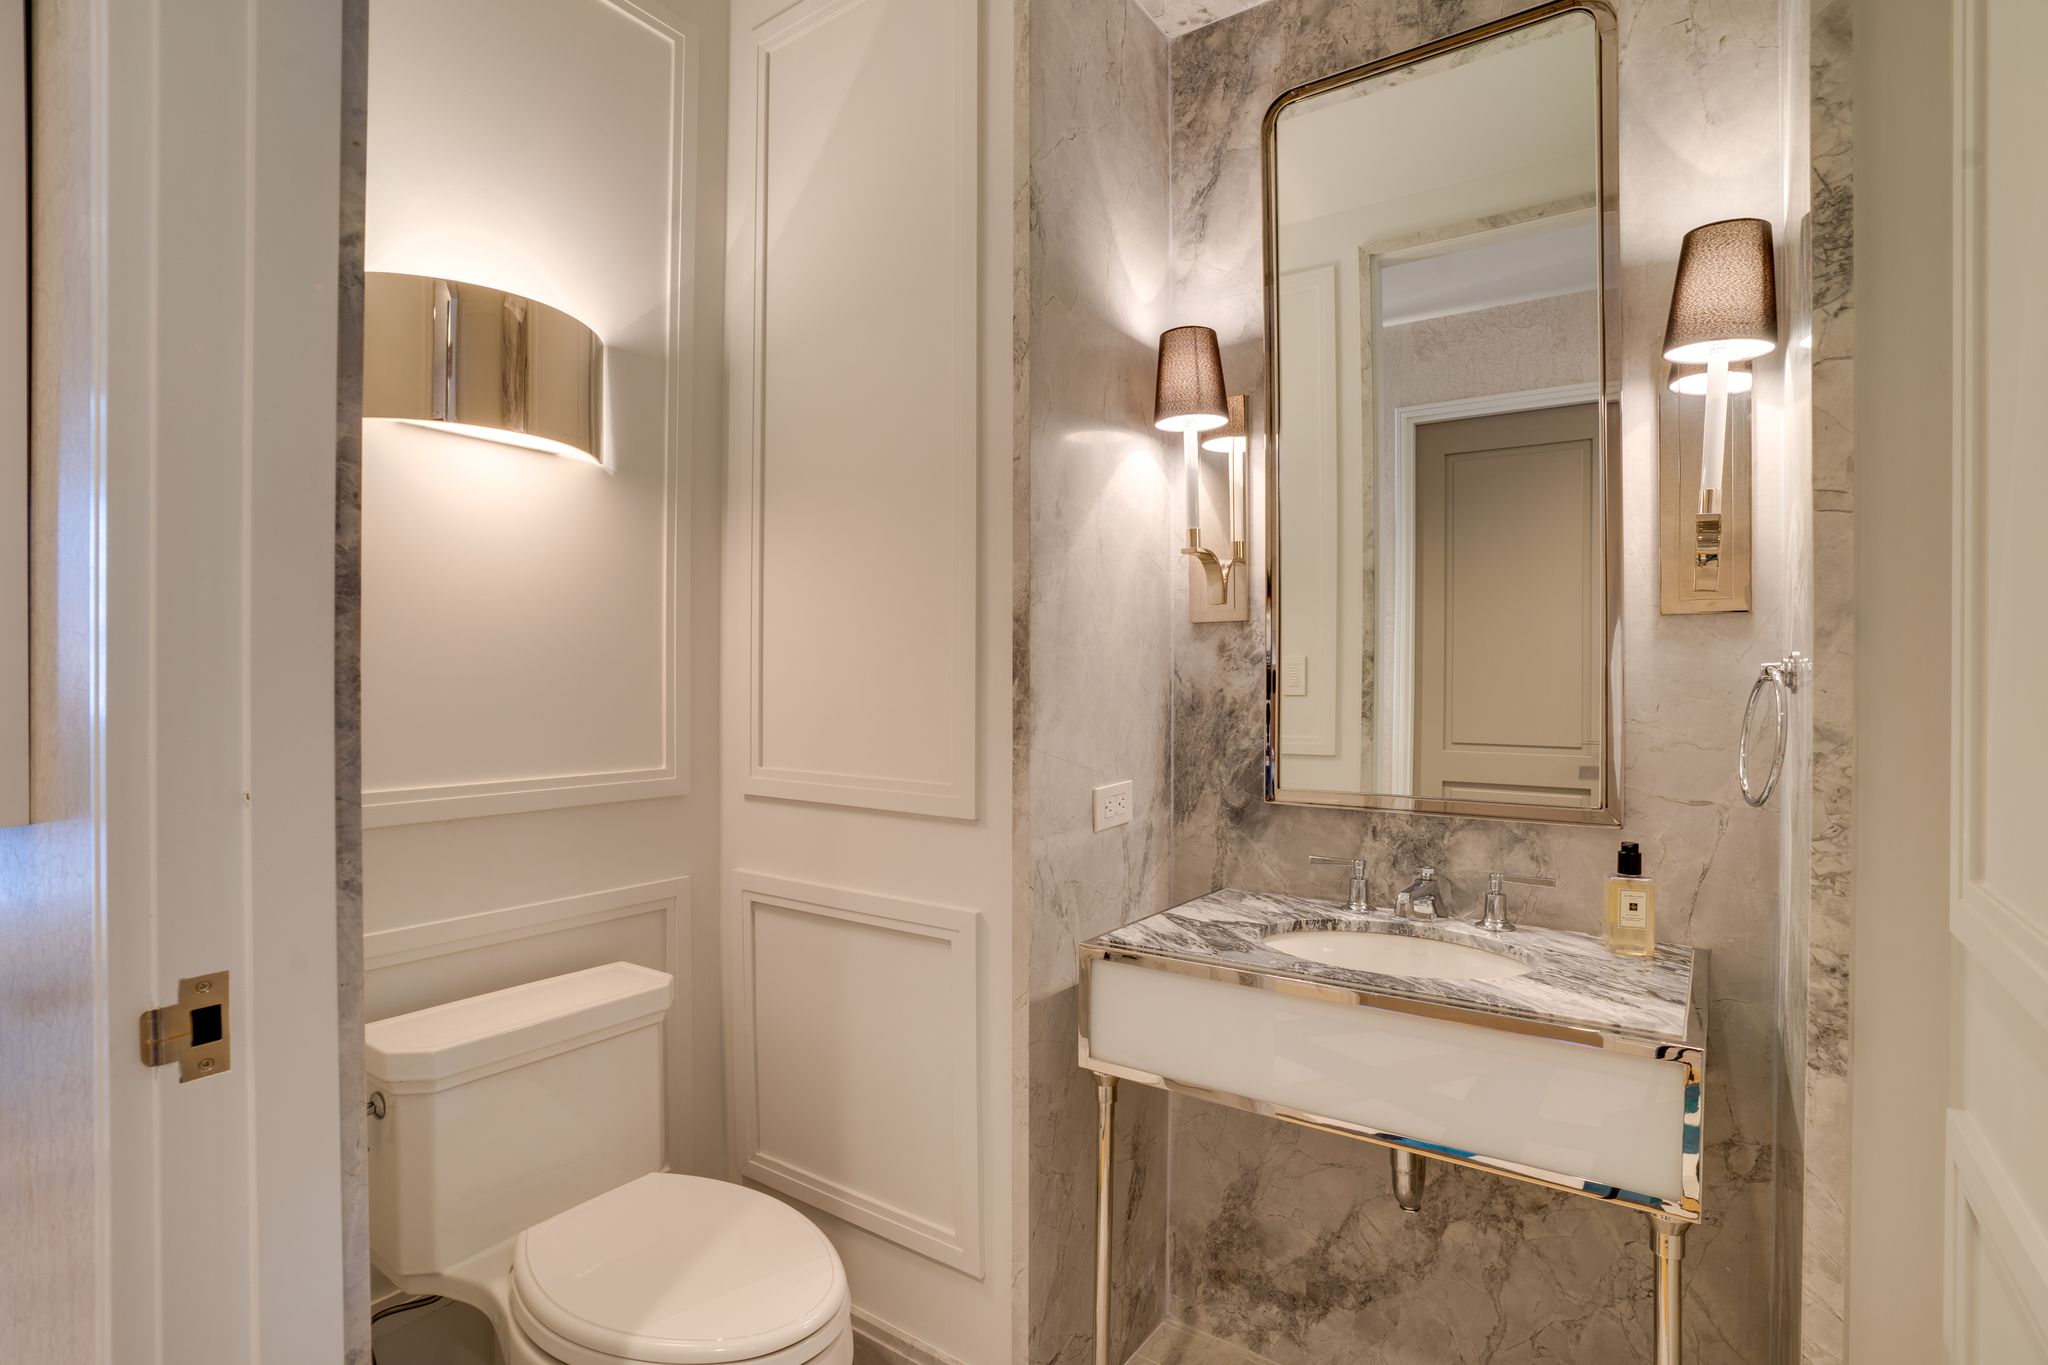 Luxury Bathroom - Apartment Renovation | 301 East 80th, New York, NY